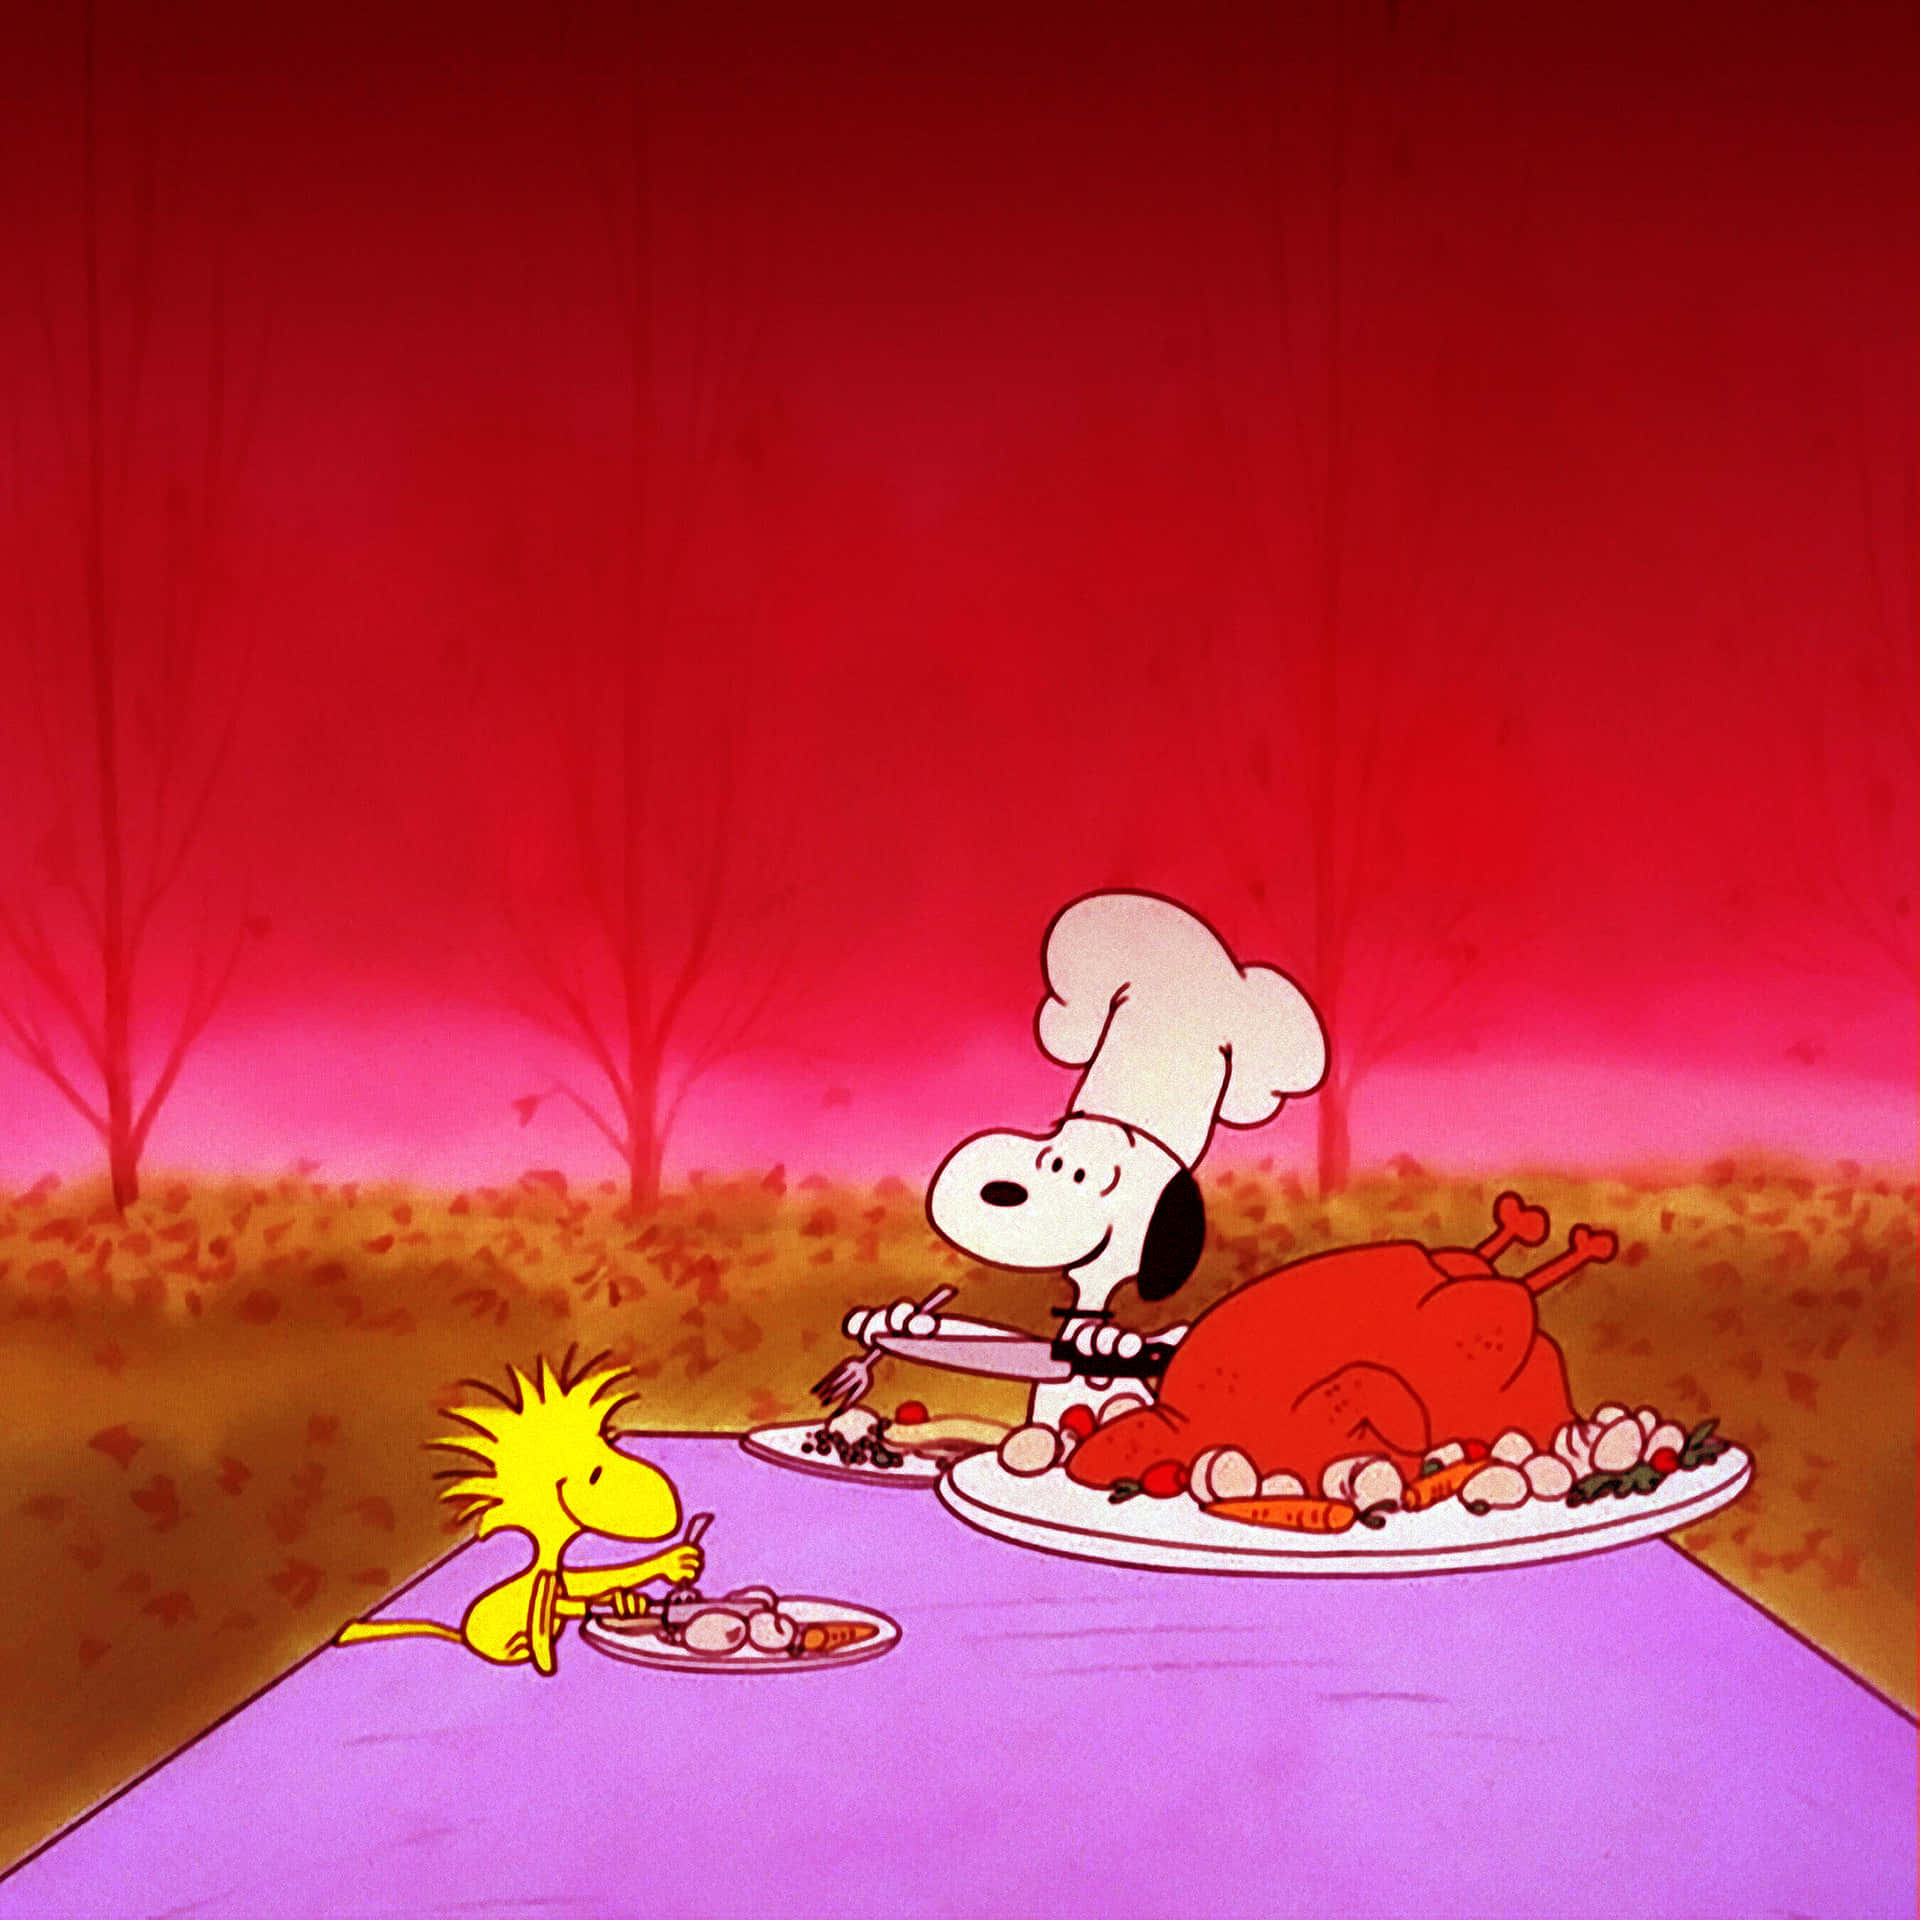 Snoopyfeiert Thanksgiving Mit Einem Festmahl. Wallpaper